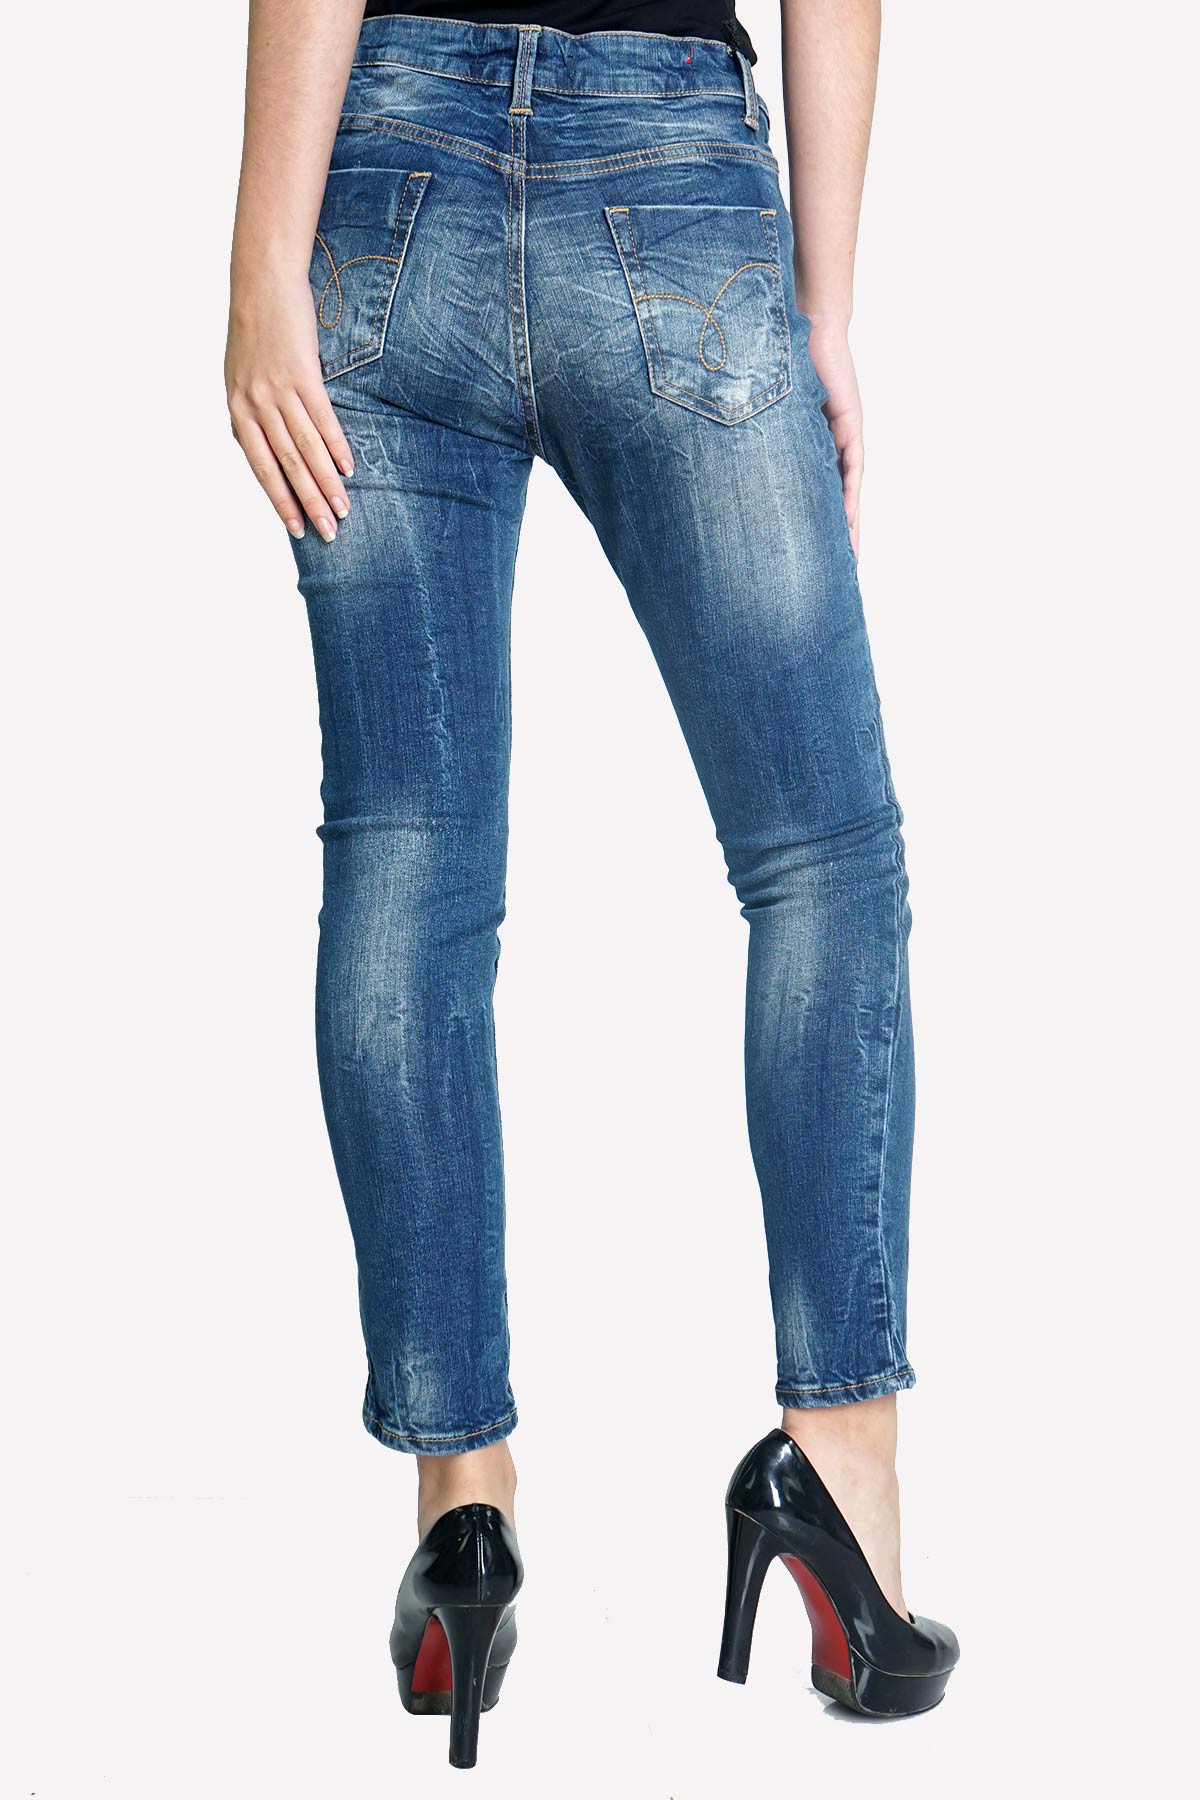 Jeans Skinny 71 Series Med Light Raw Handmade